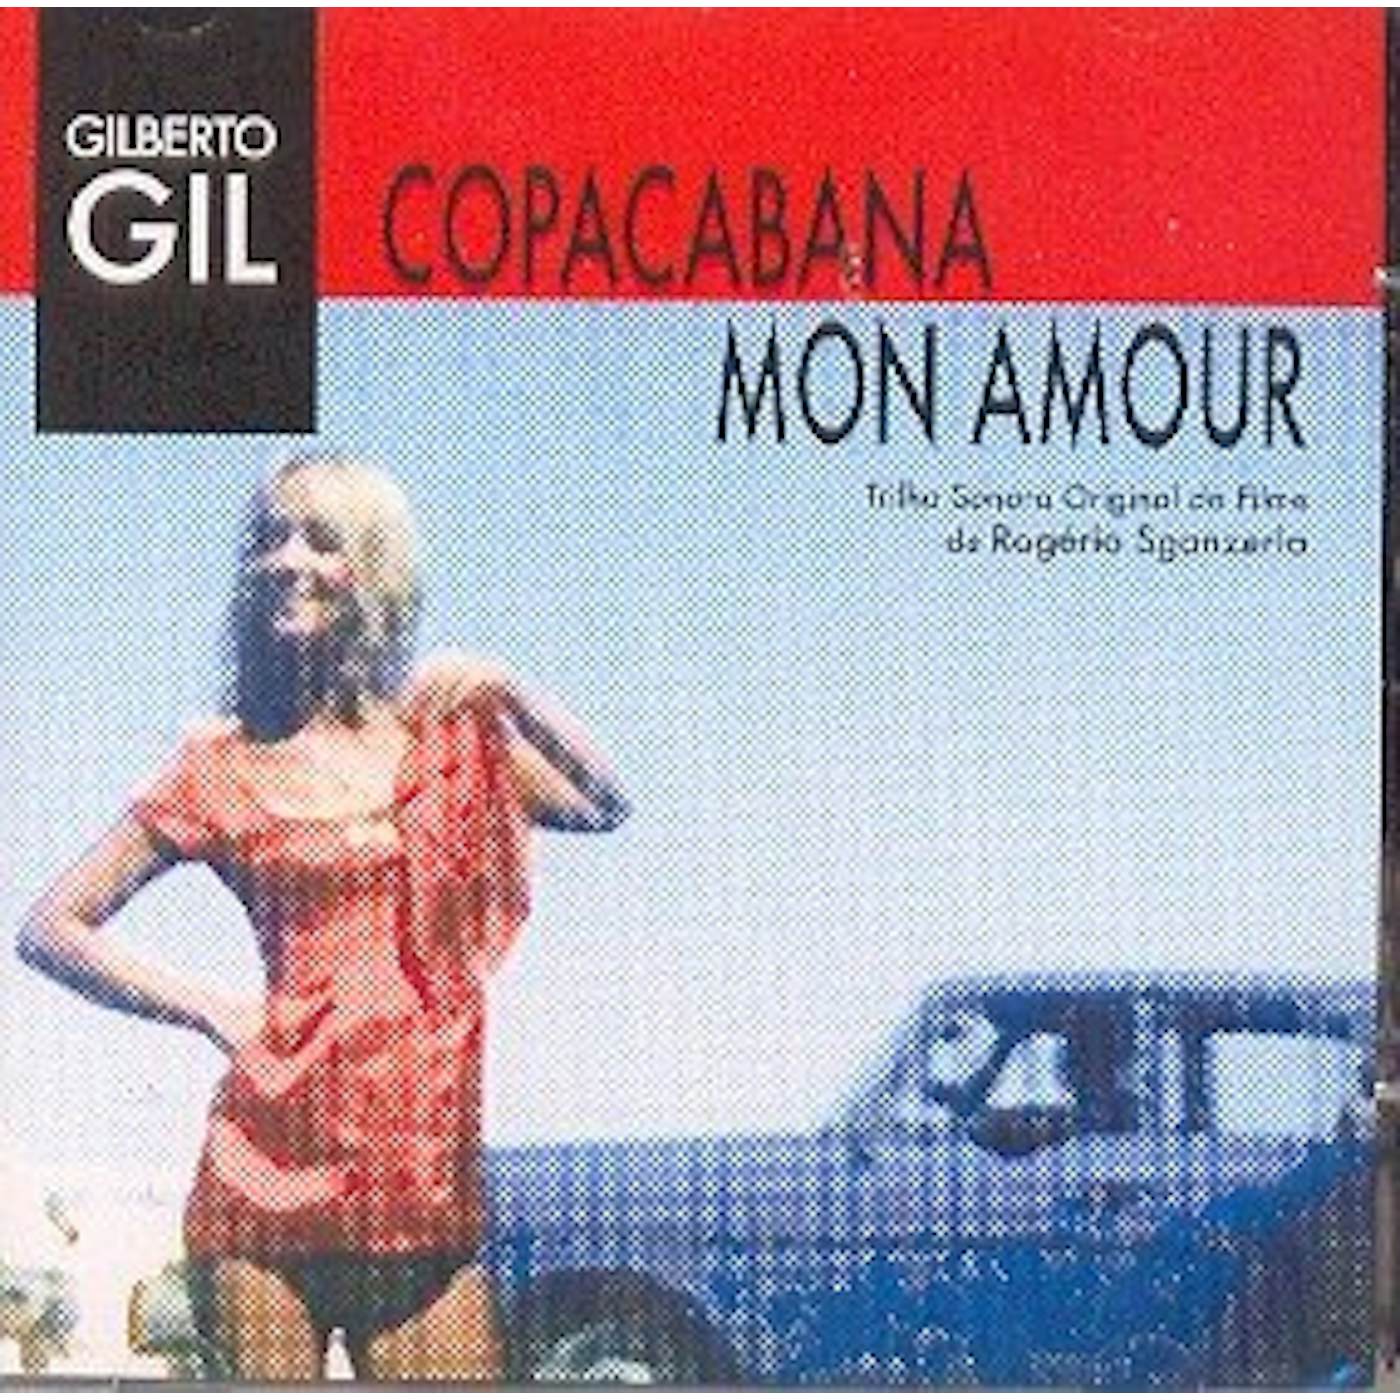 Gilberto Gil COPACABANA MON AMOUR CD